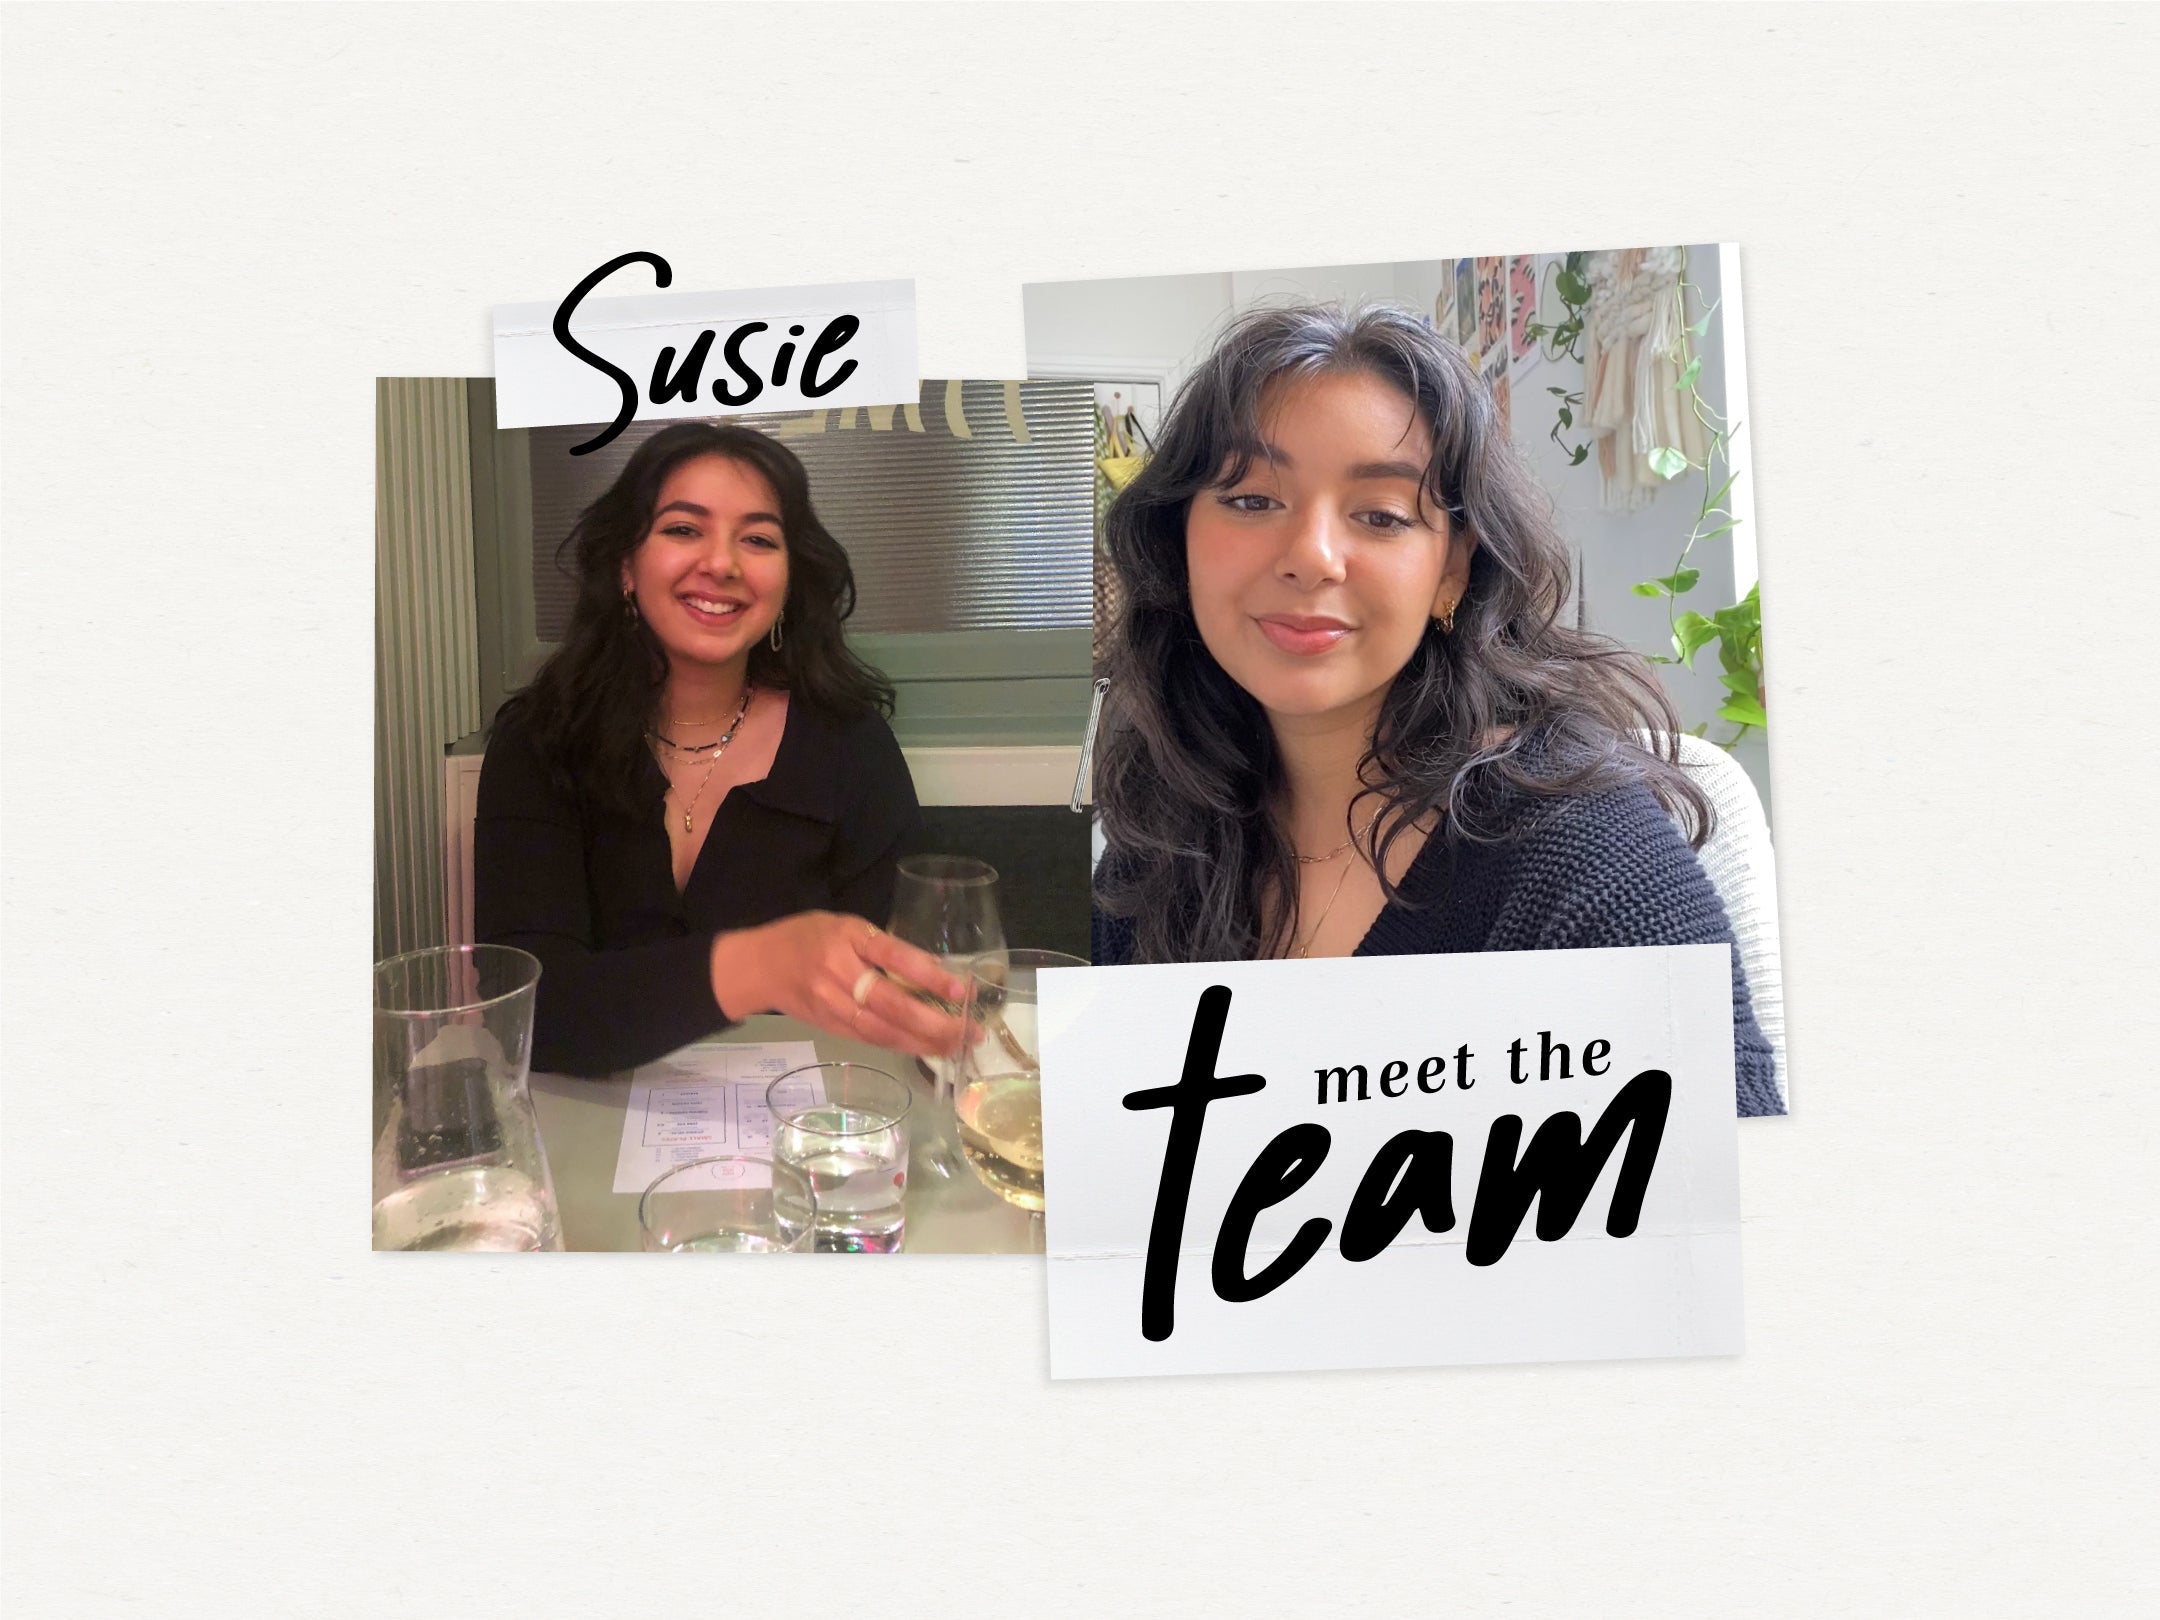 Meet the Team! Susie - Accessories Designer